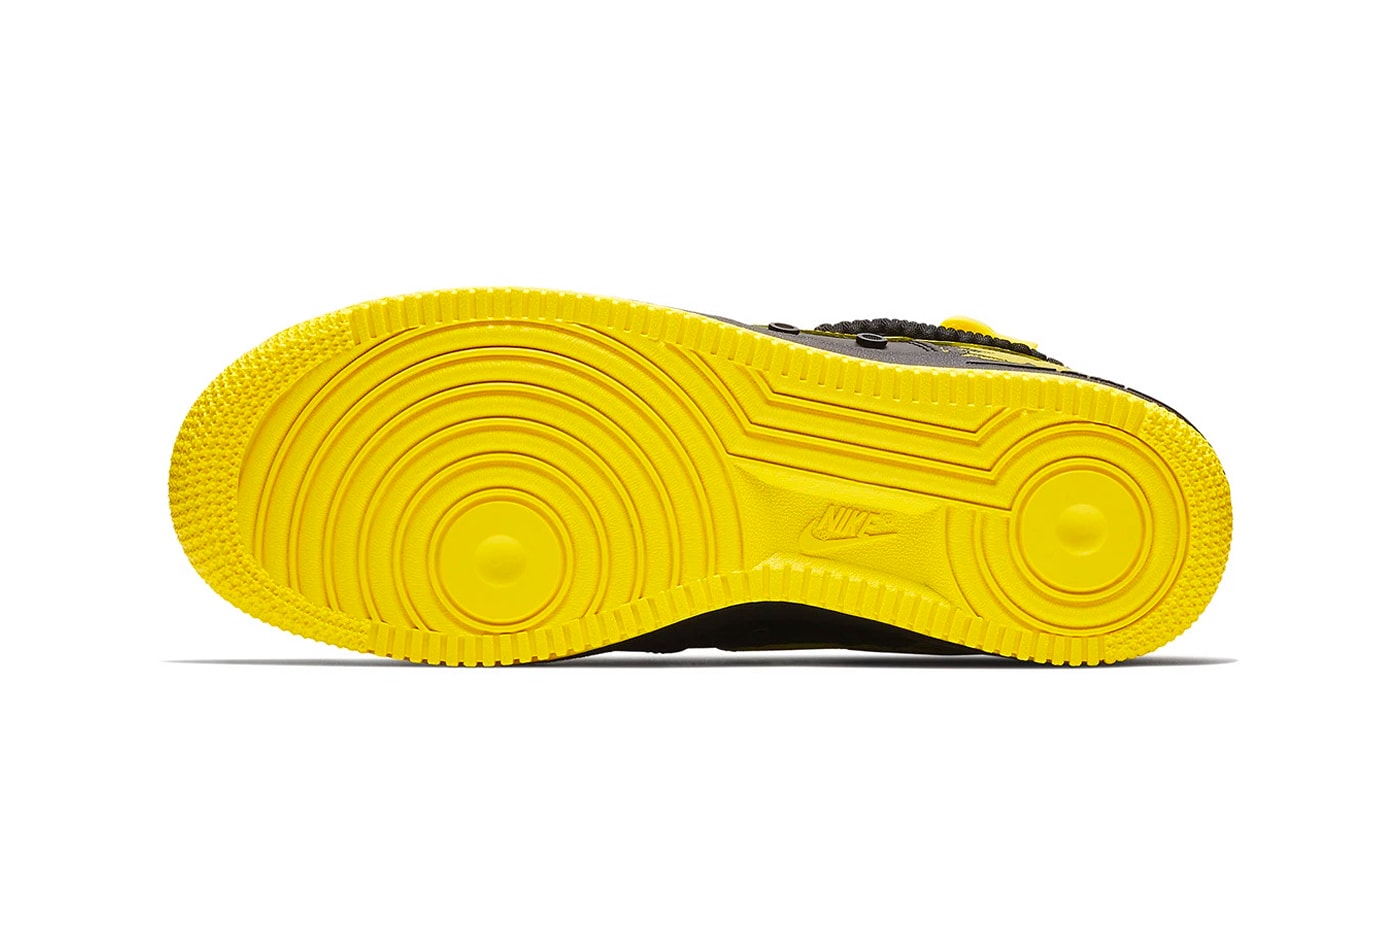 Nike SF-AF1 High Black Dynamic Yellow leather ballistic nylon sneakers footwear